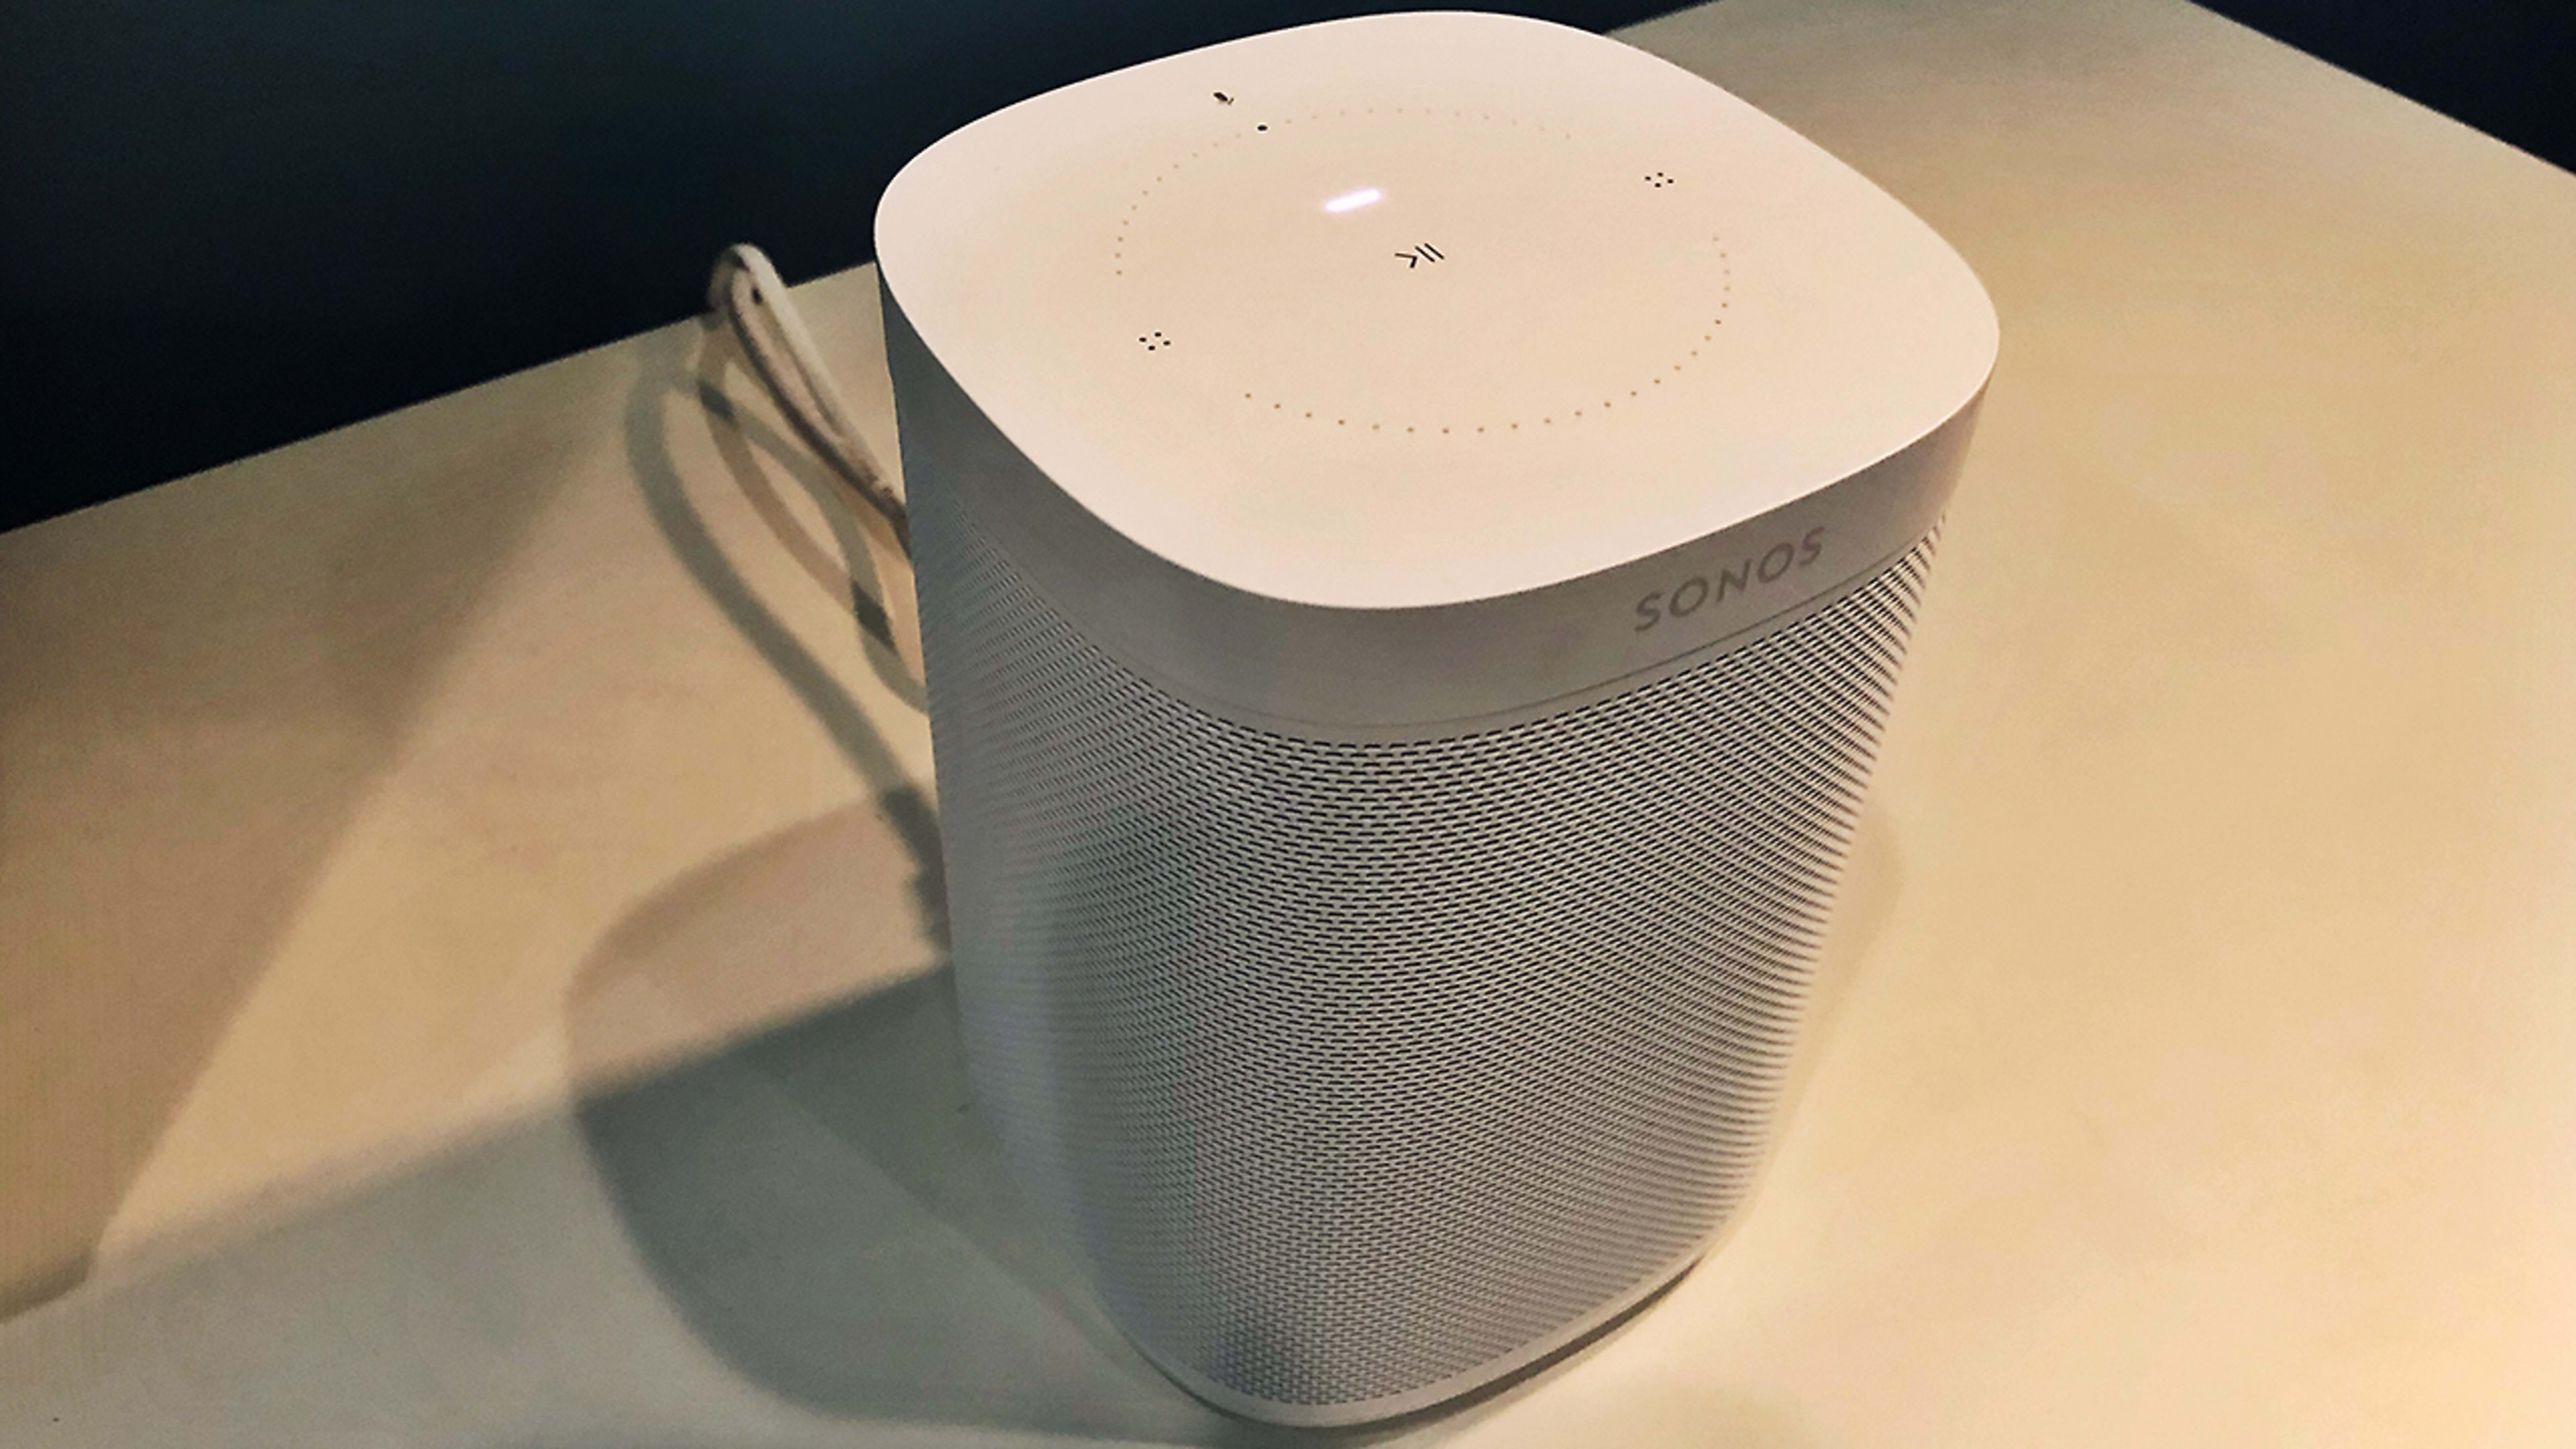 Sonos’s first Alexa-powered smart speaker is finally here